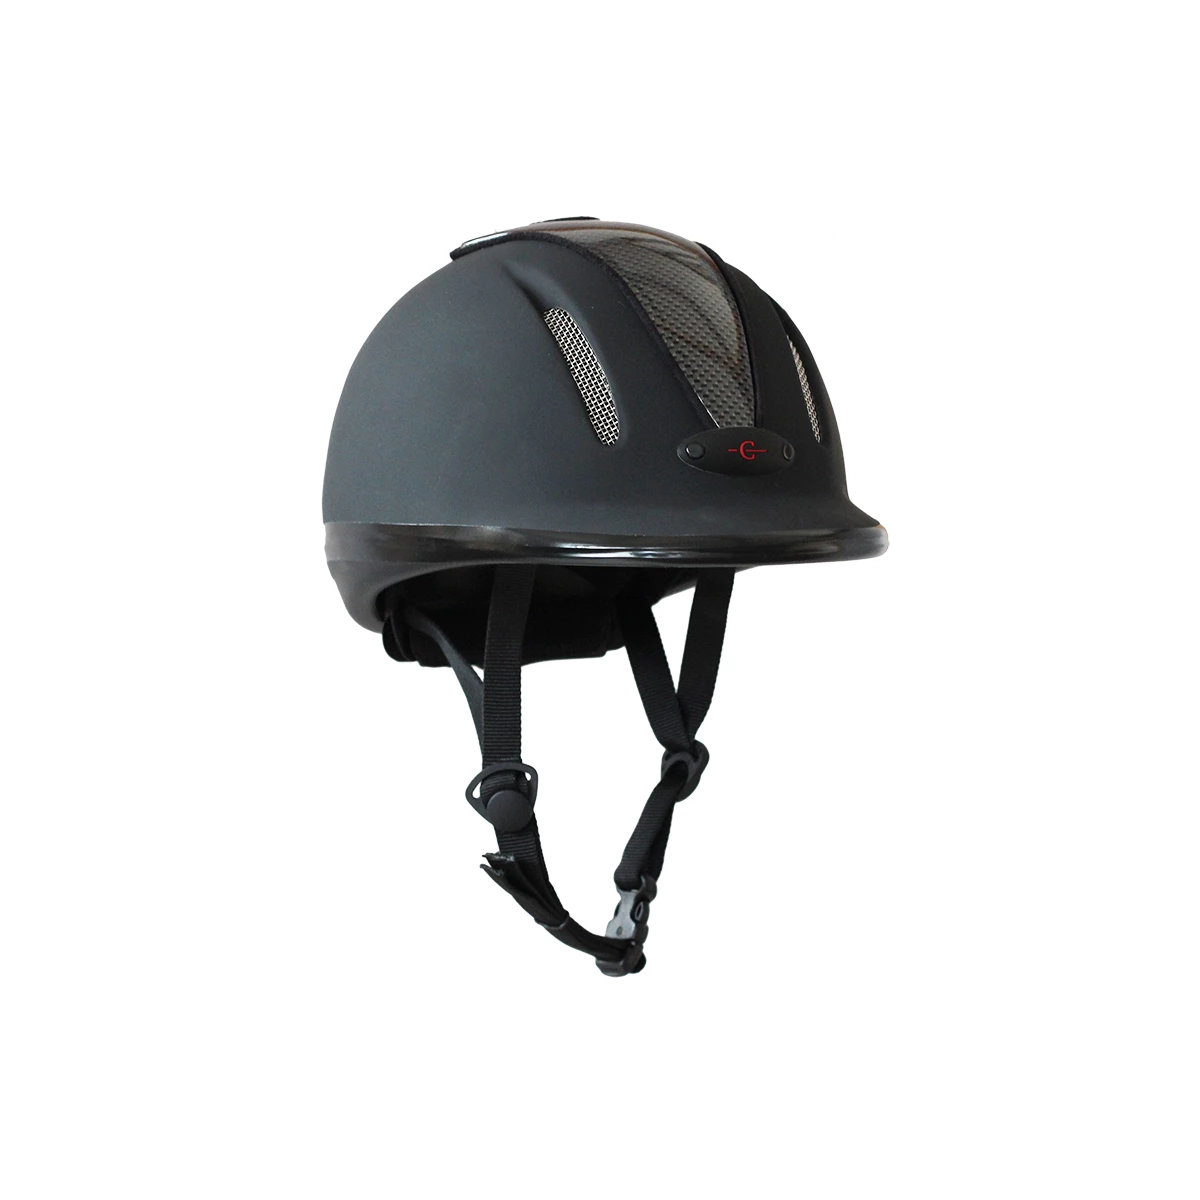 Riding helmet "Carbonic", anthracite